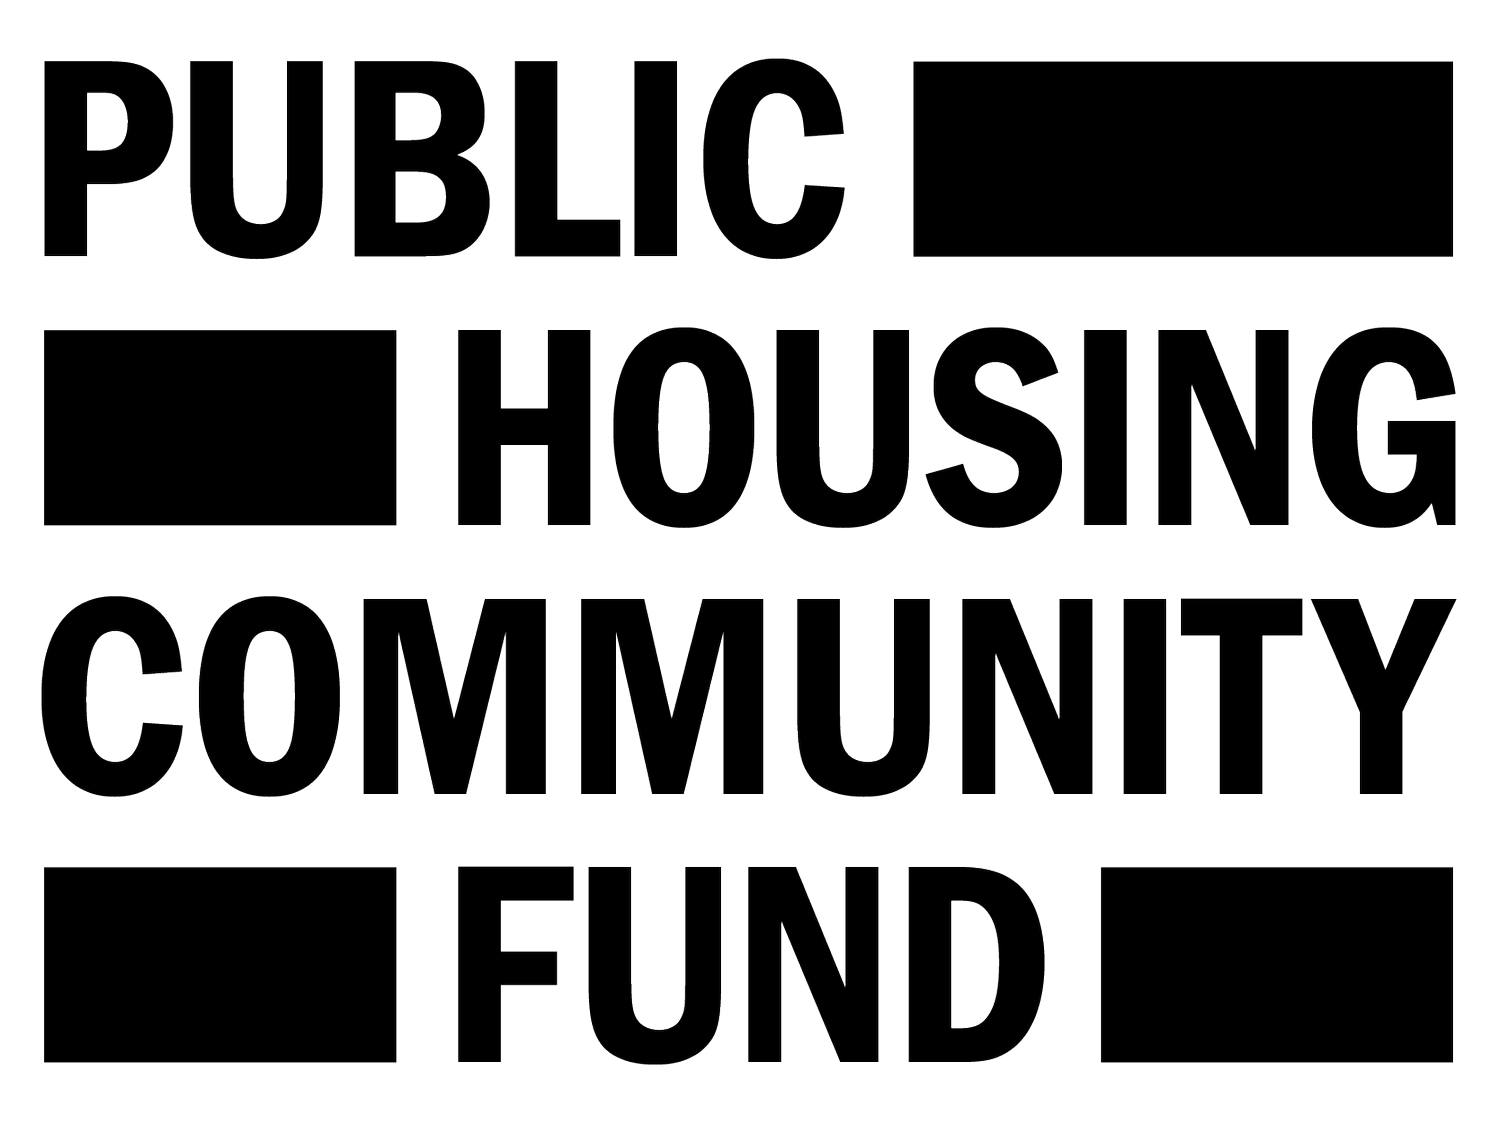 Public Housing Community Fund logo